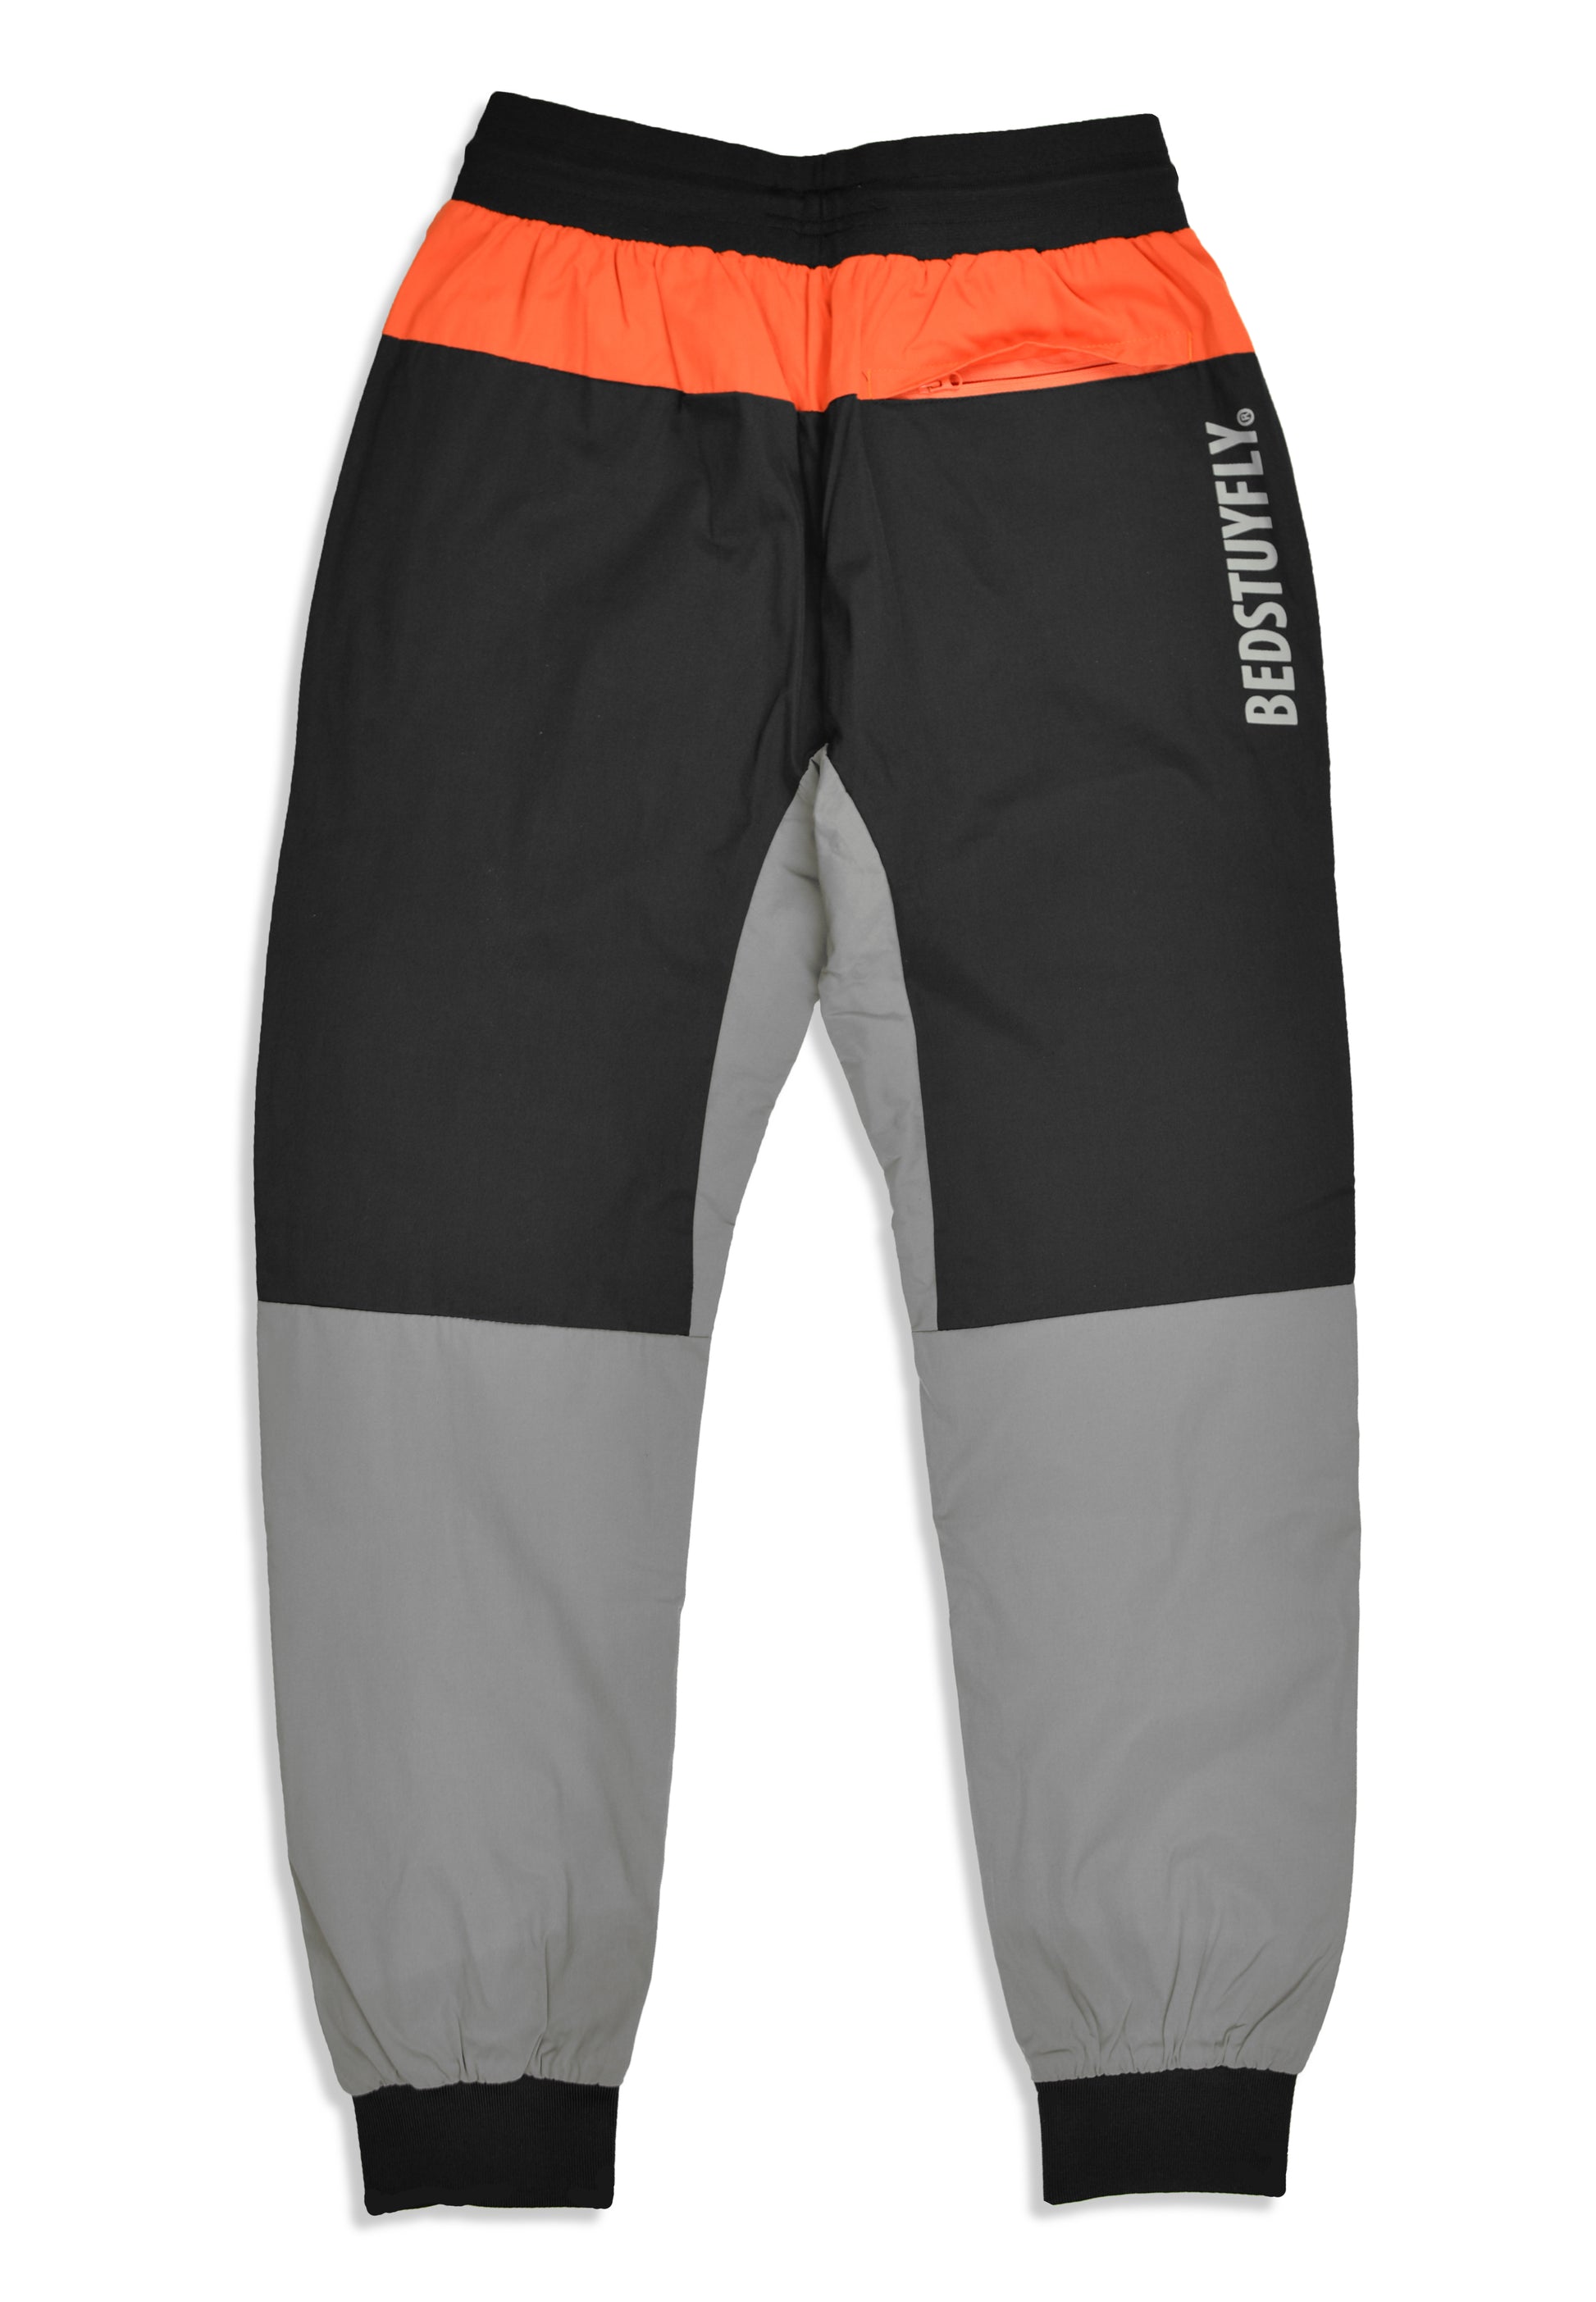 2.0 Tech Pants (Black/Orange) - Bedstuyfly